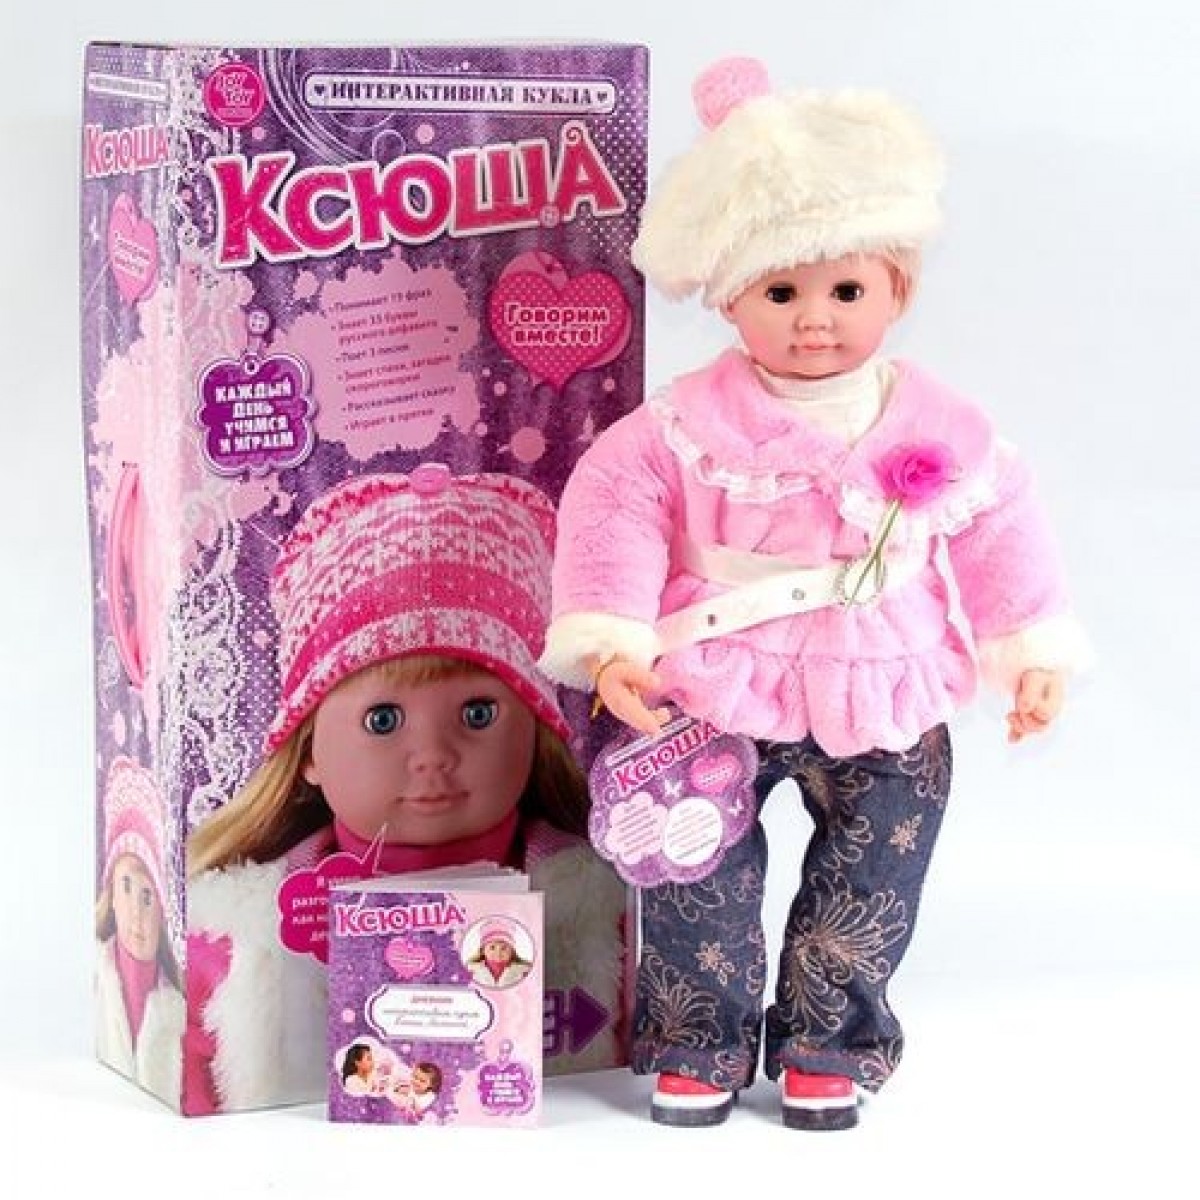 Говорящий большой кукла. Кукла Ксюша Ласкина. Интерактивная кукла Ксюша Joy Toy. Говорящая кукла Ксюша Ласкина. Кукла Ксюша 5334.